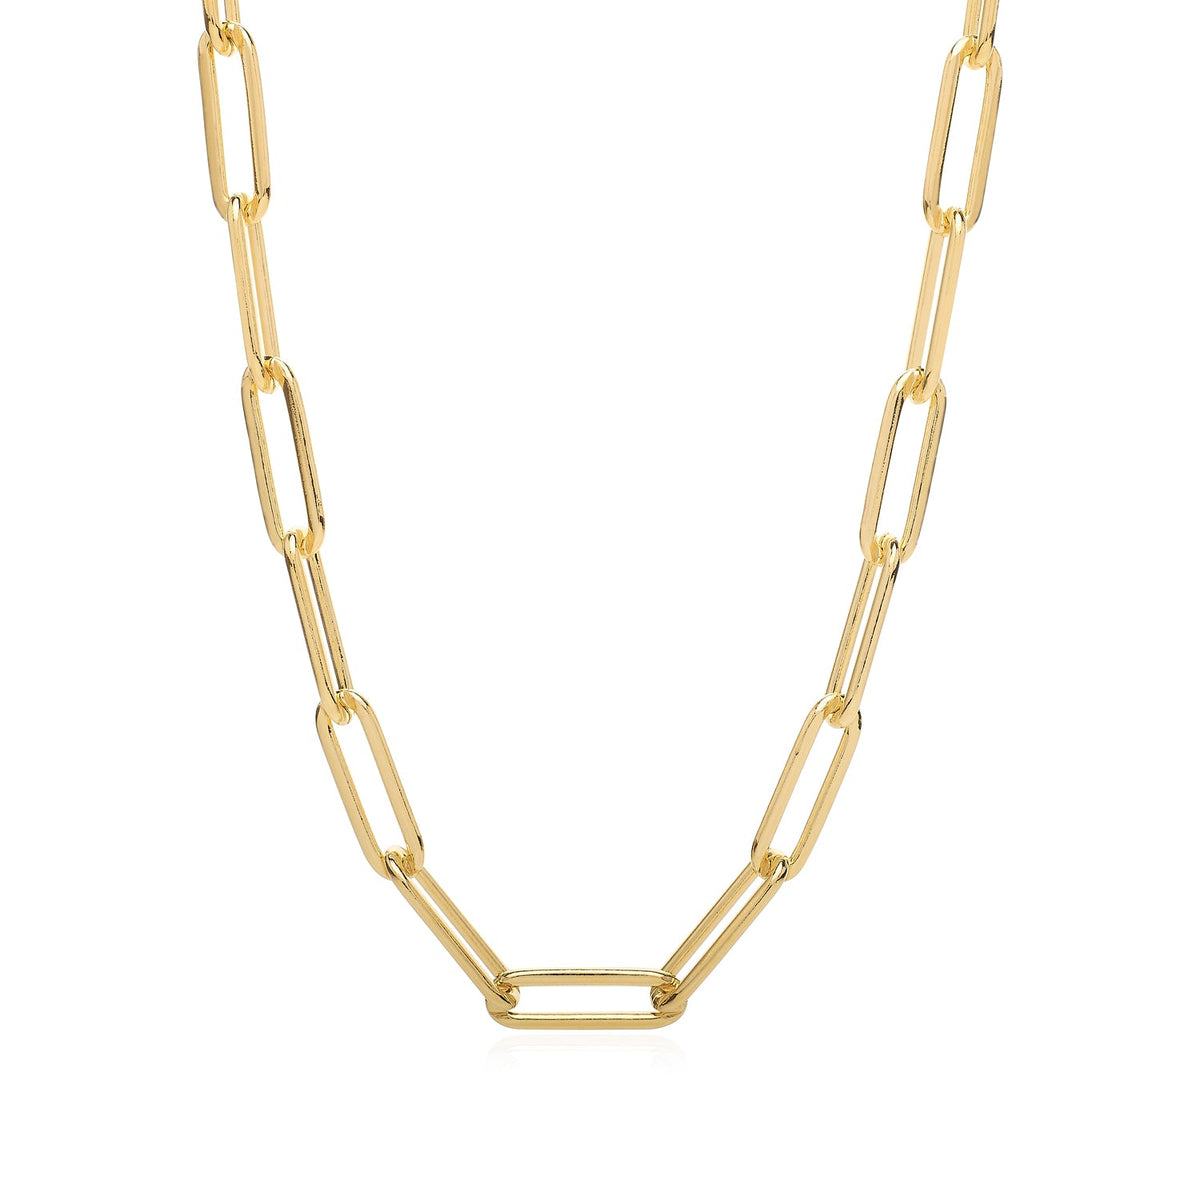 Olaeda Heavy Paperclip Chain Necklace - 20"